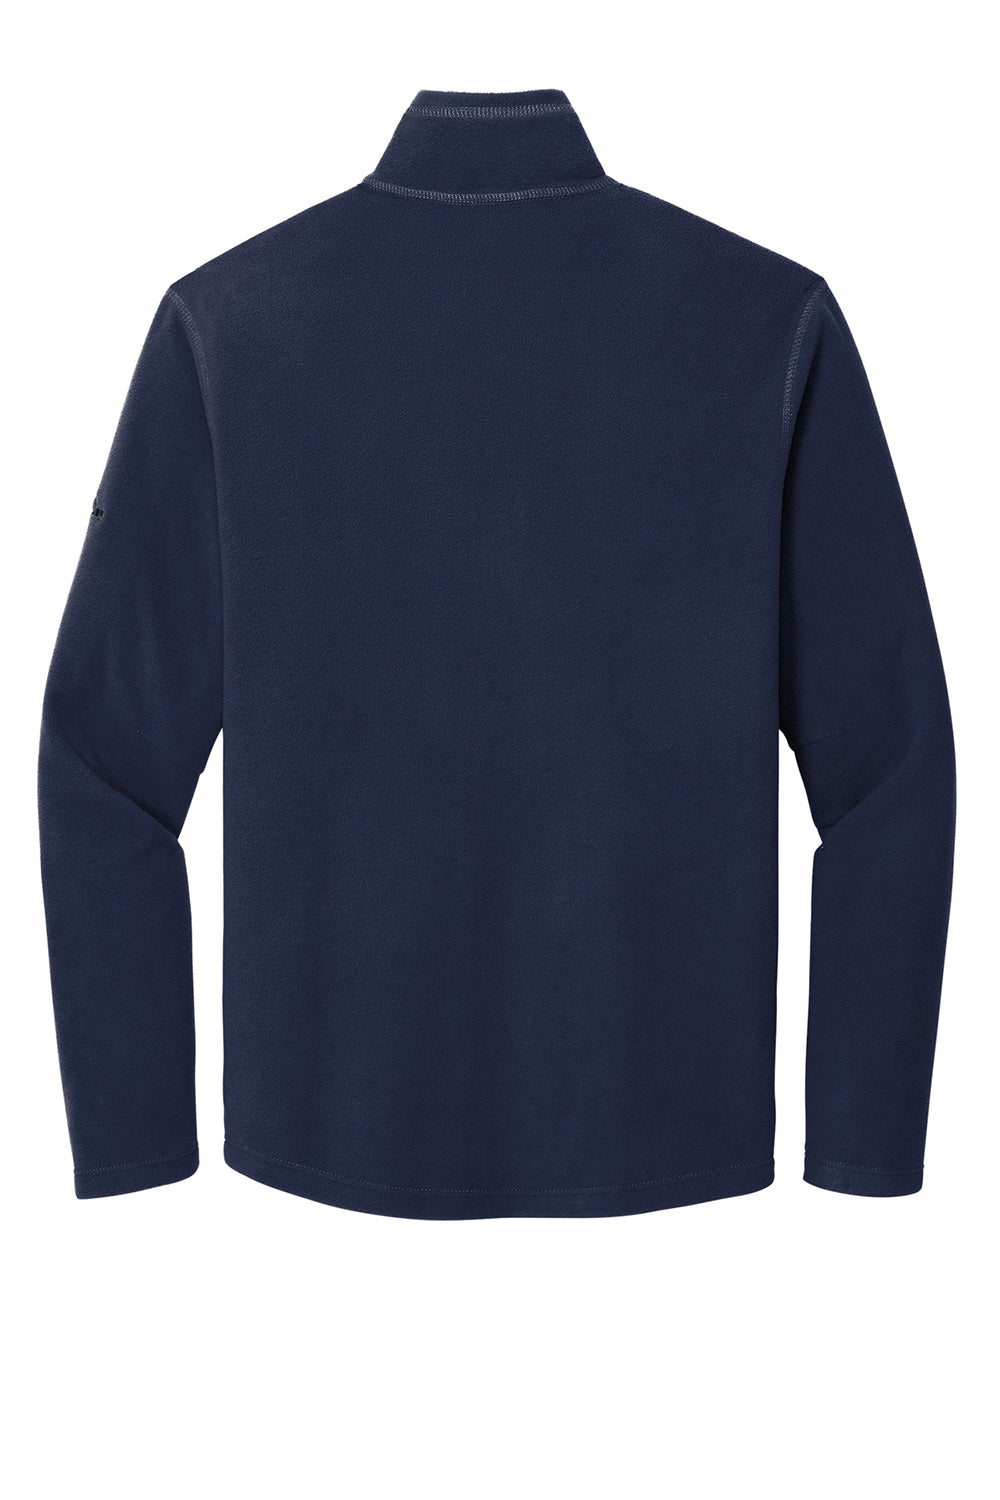 Eddie Bauer EB226 Mens Pill Resistant Microfleece 1/4 Zip Sweatshirt Navy Blue Flat Back